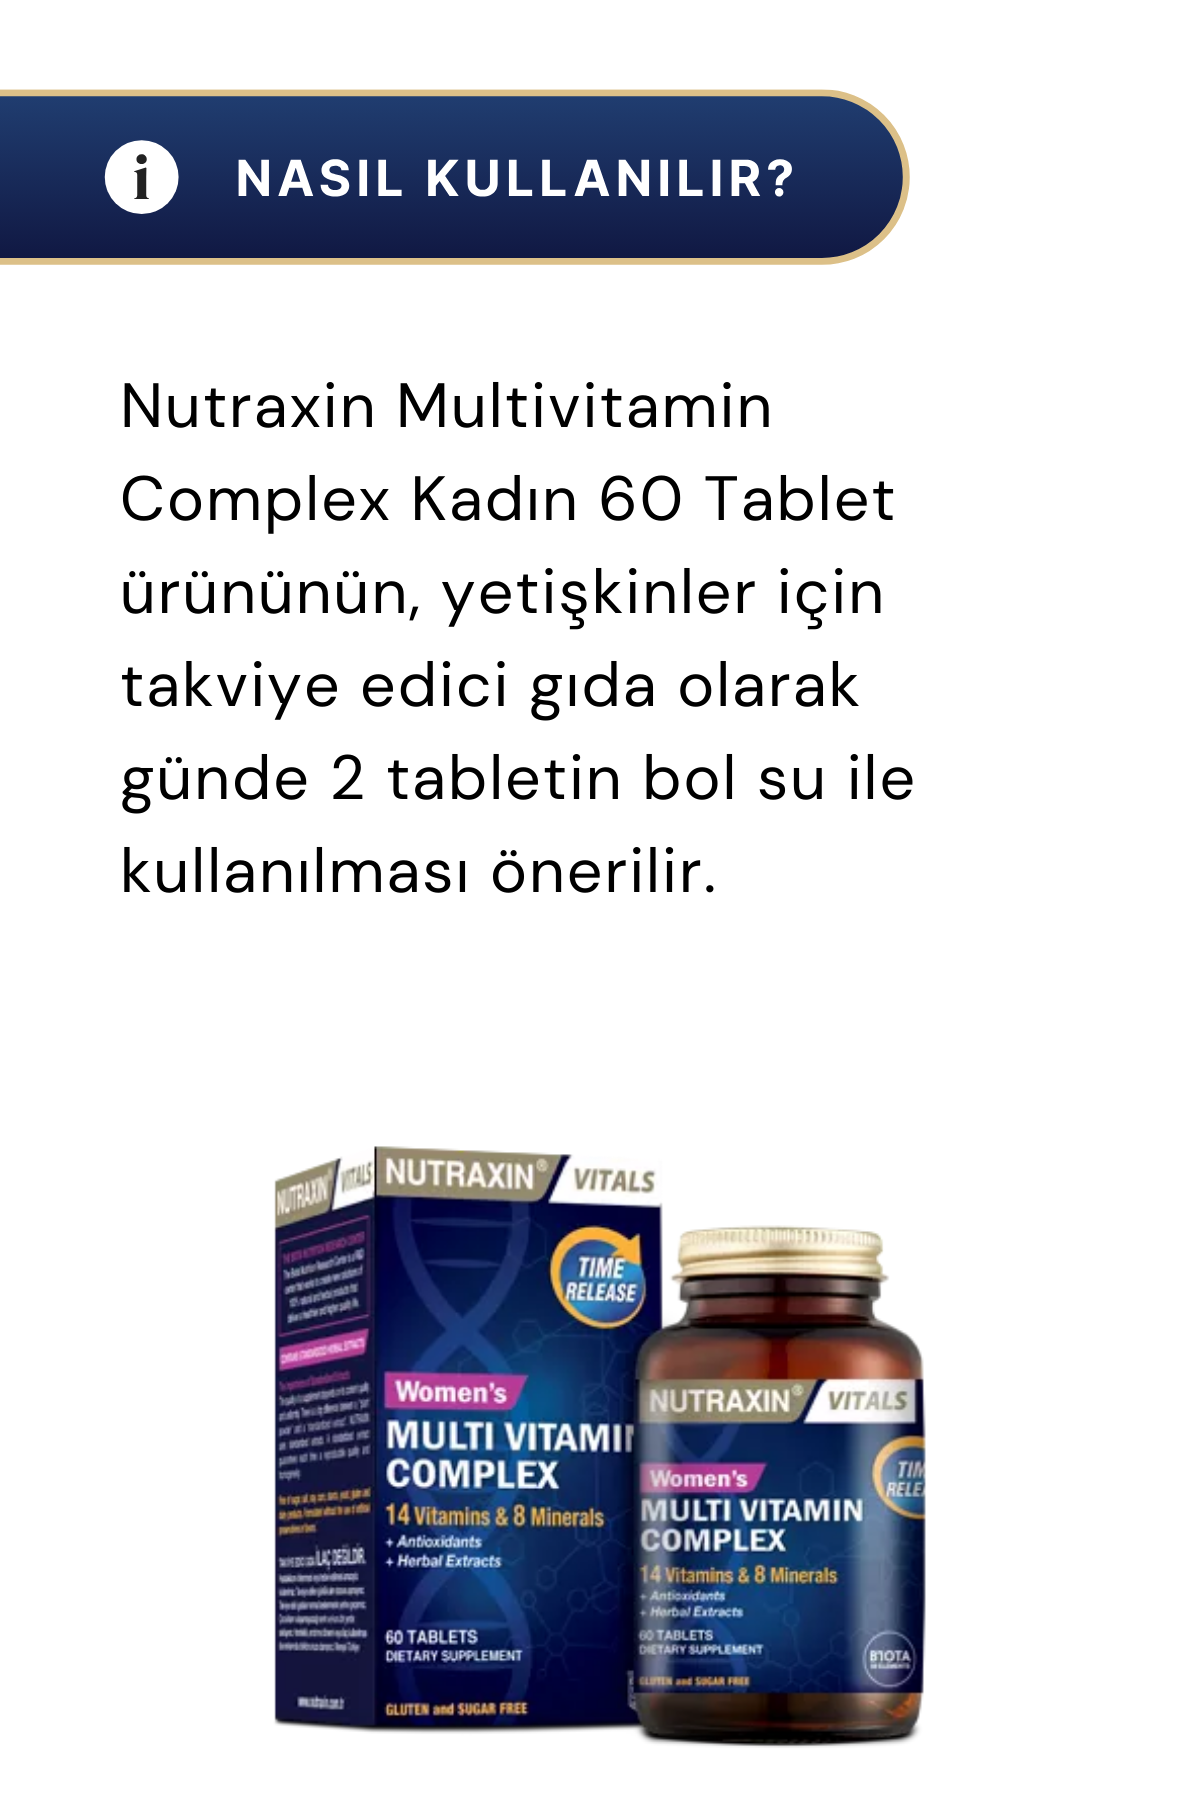 Nutraxin Multivitamin Complex Kadın 60 Tablet 3'lü Paket